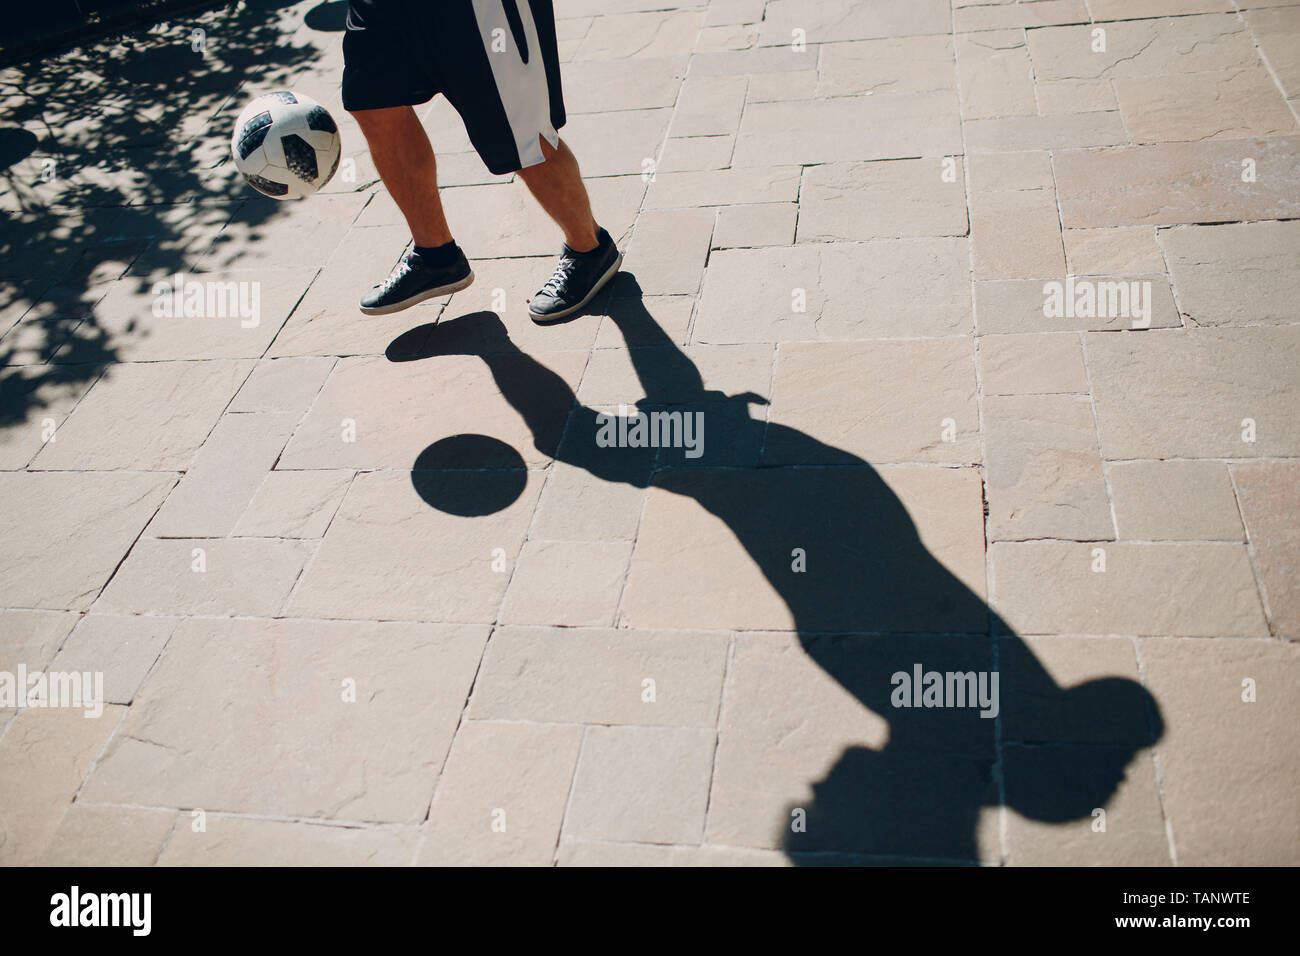 Soccer player kicks the ball Stock Photo